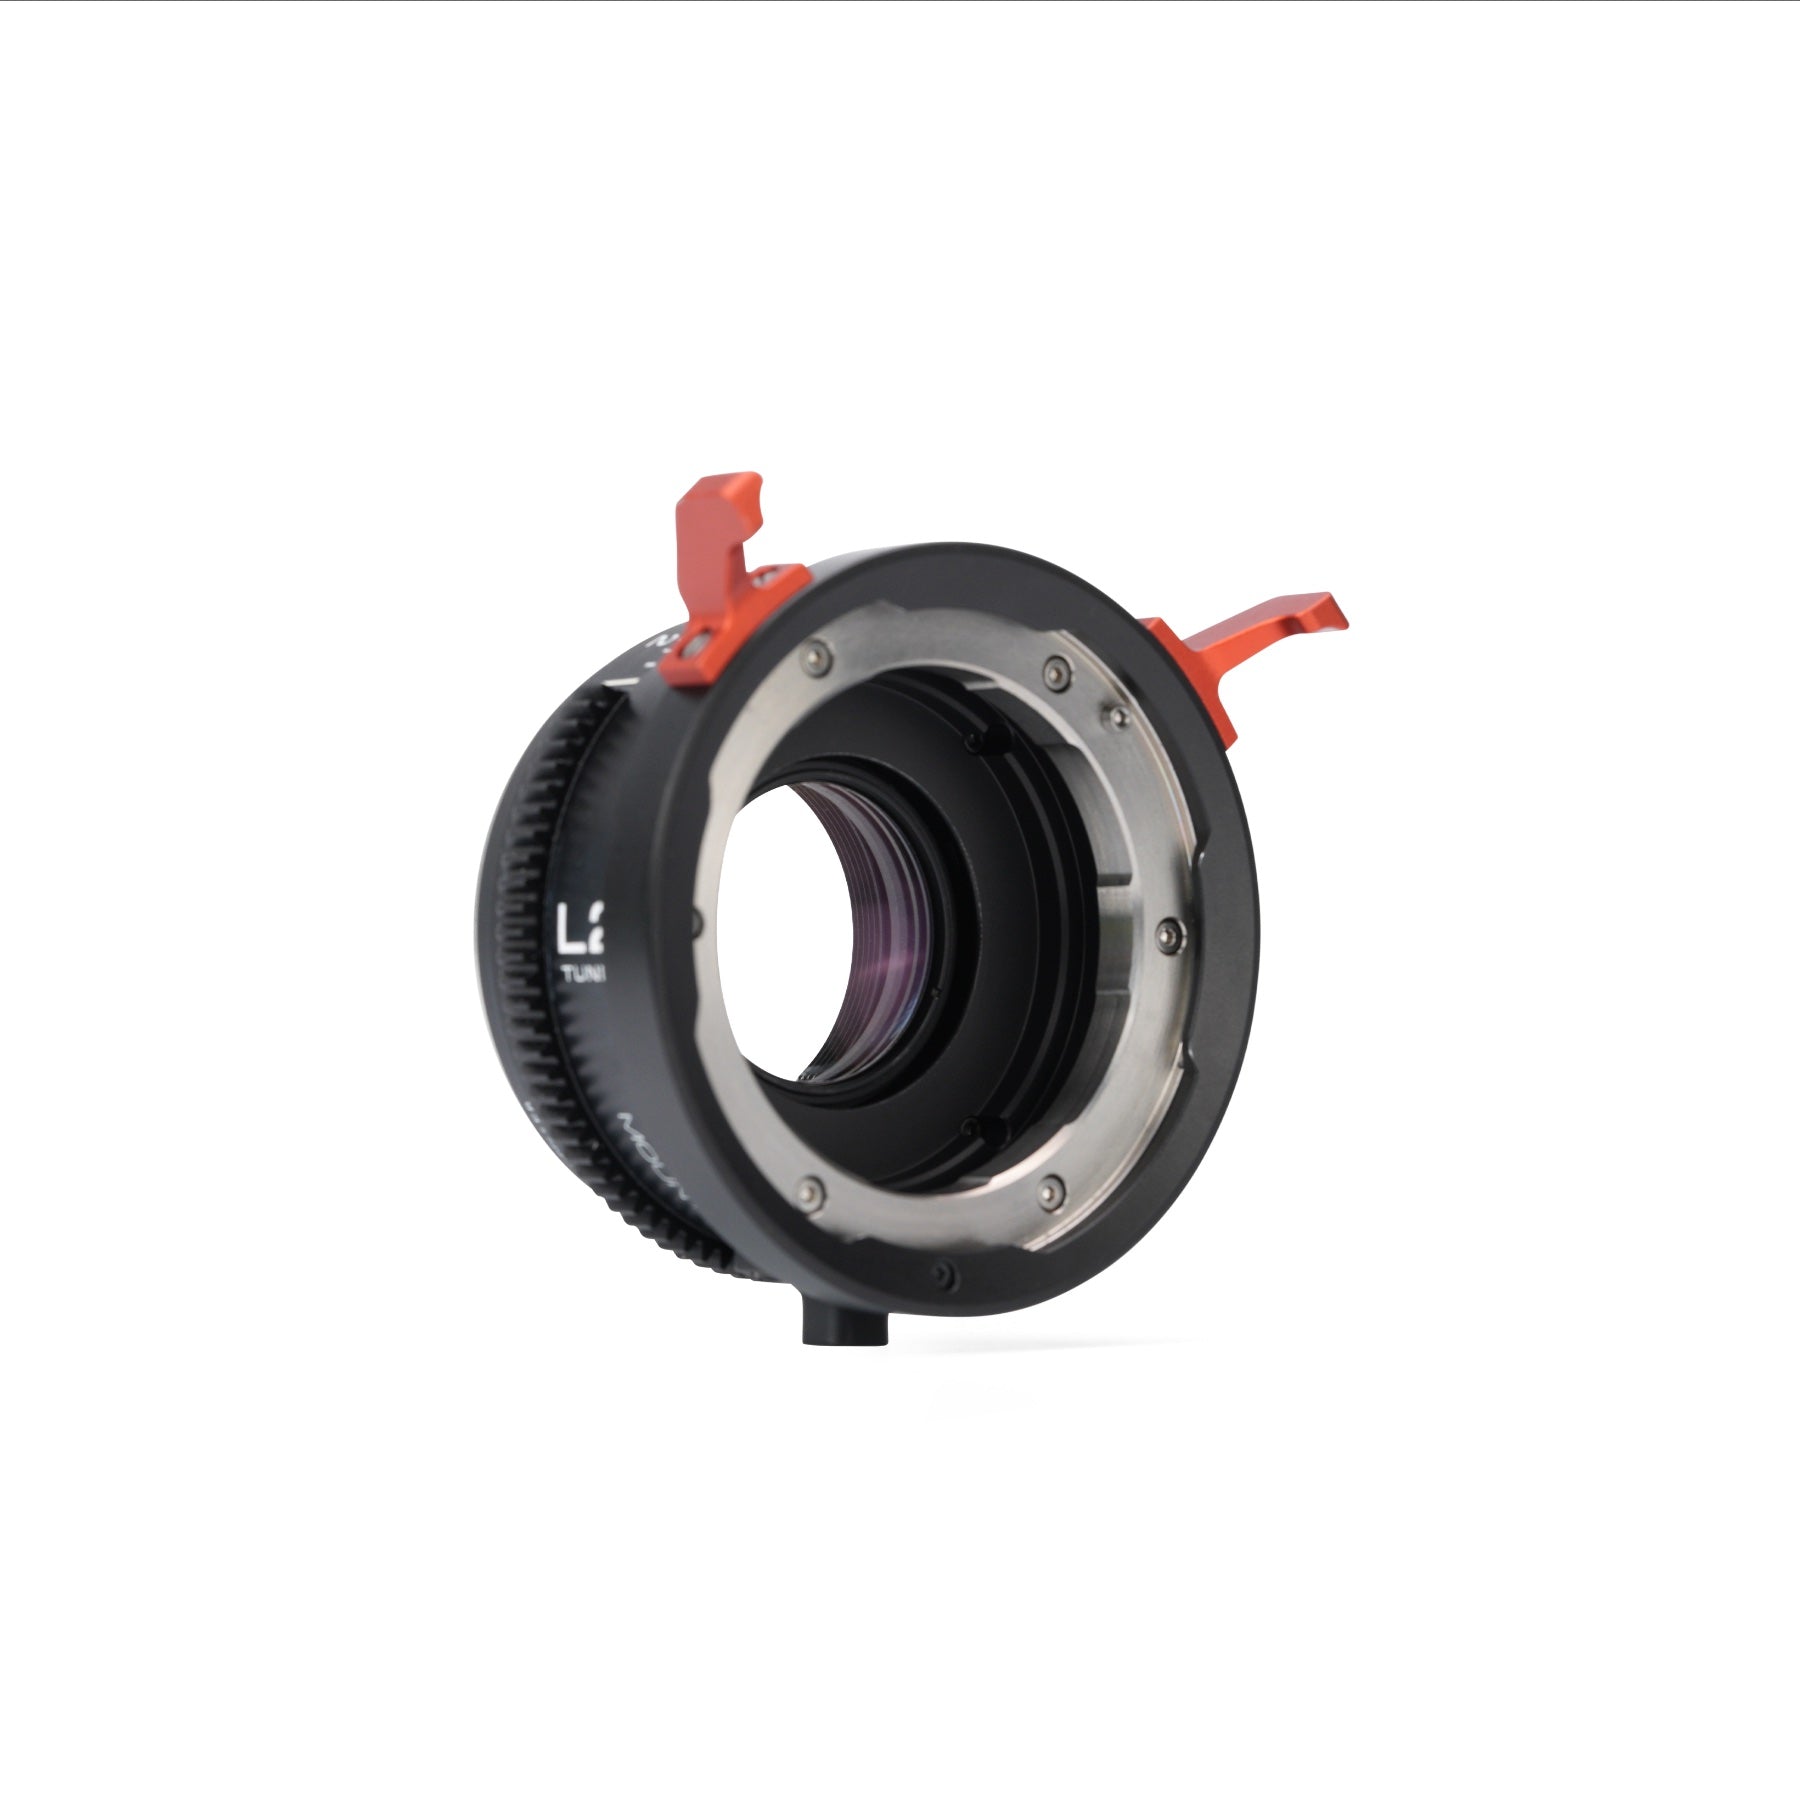 L2 Tuner - K35 Variable Look Lens